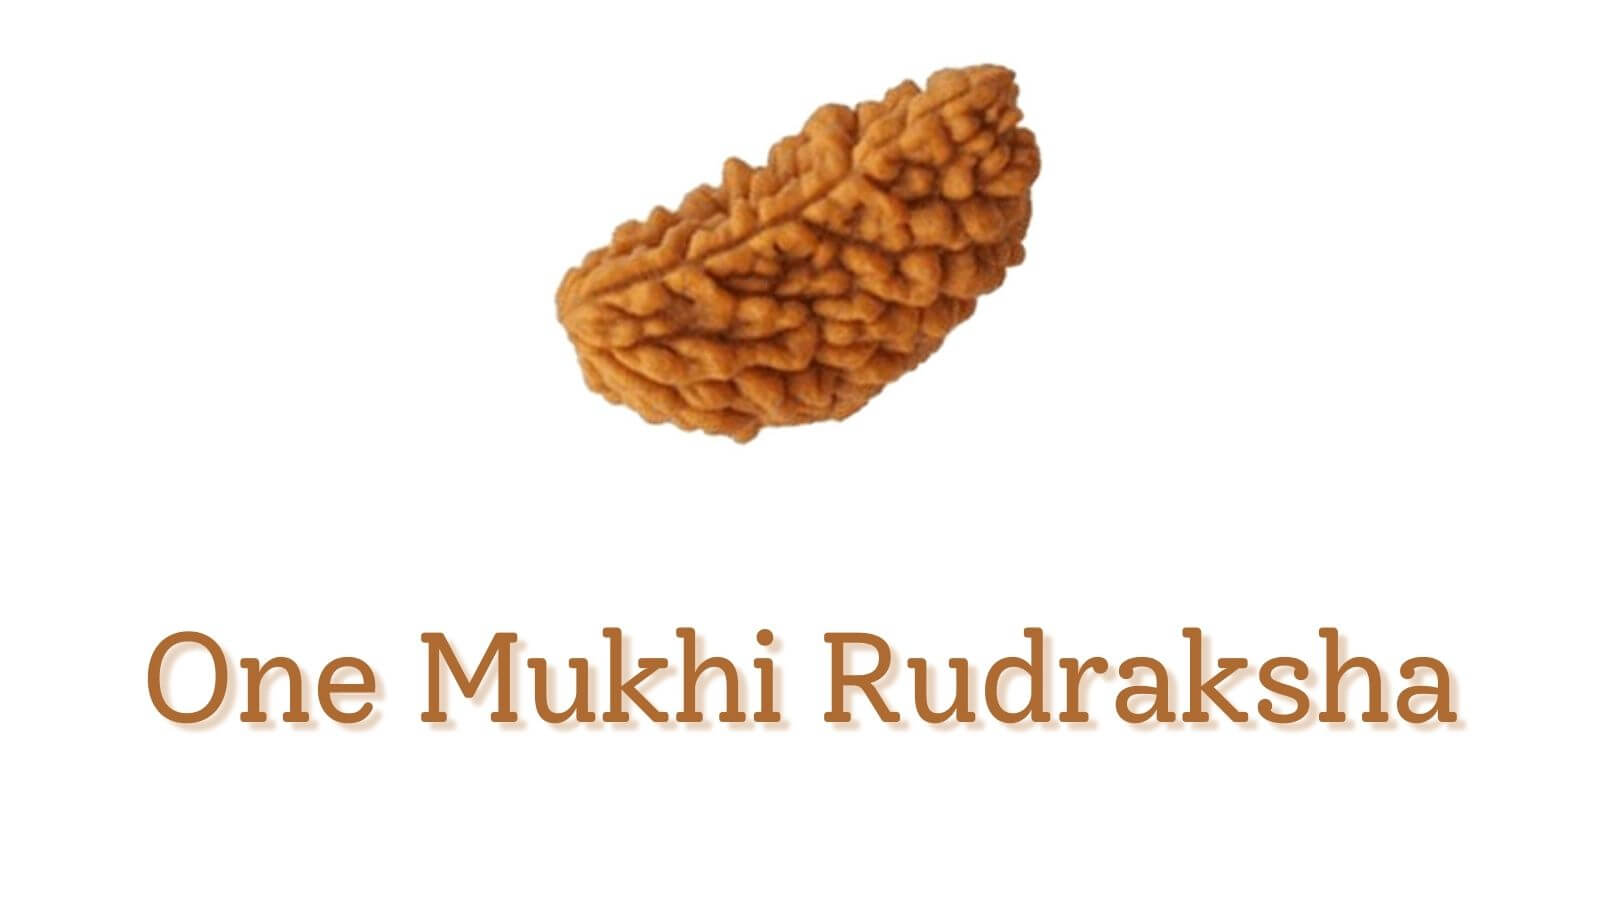 One Mukhi Rudraksha, It's Benefits, Precautions, And Types